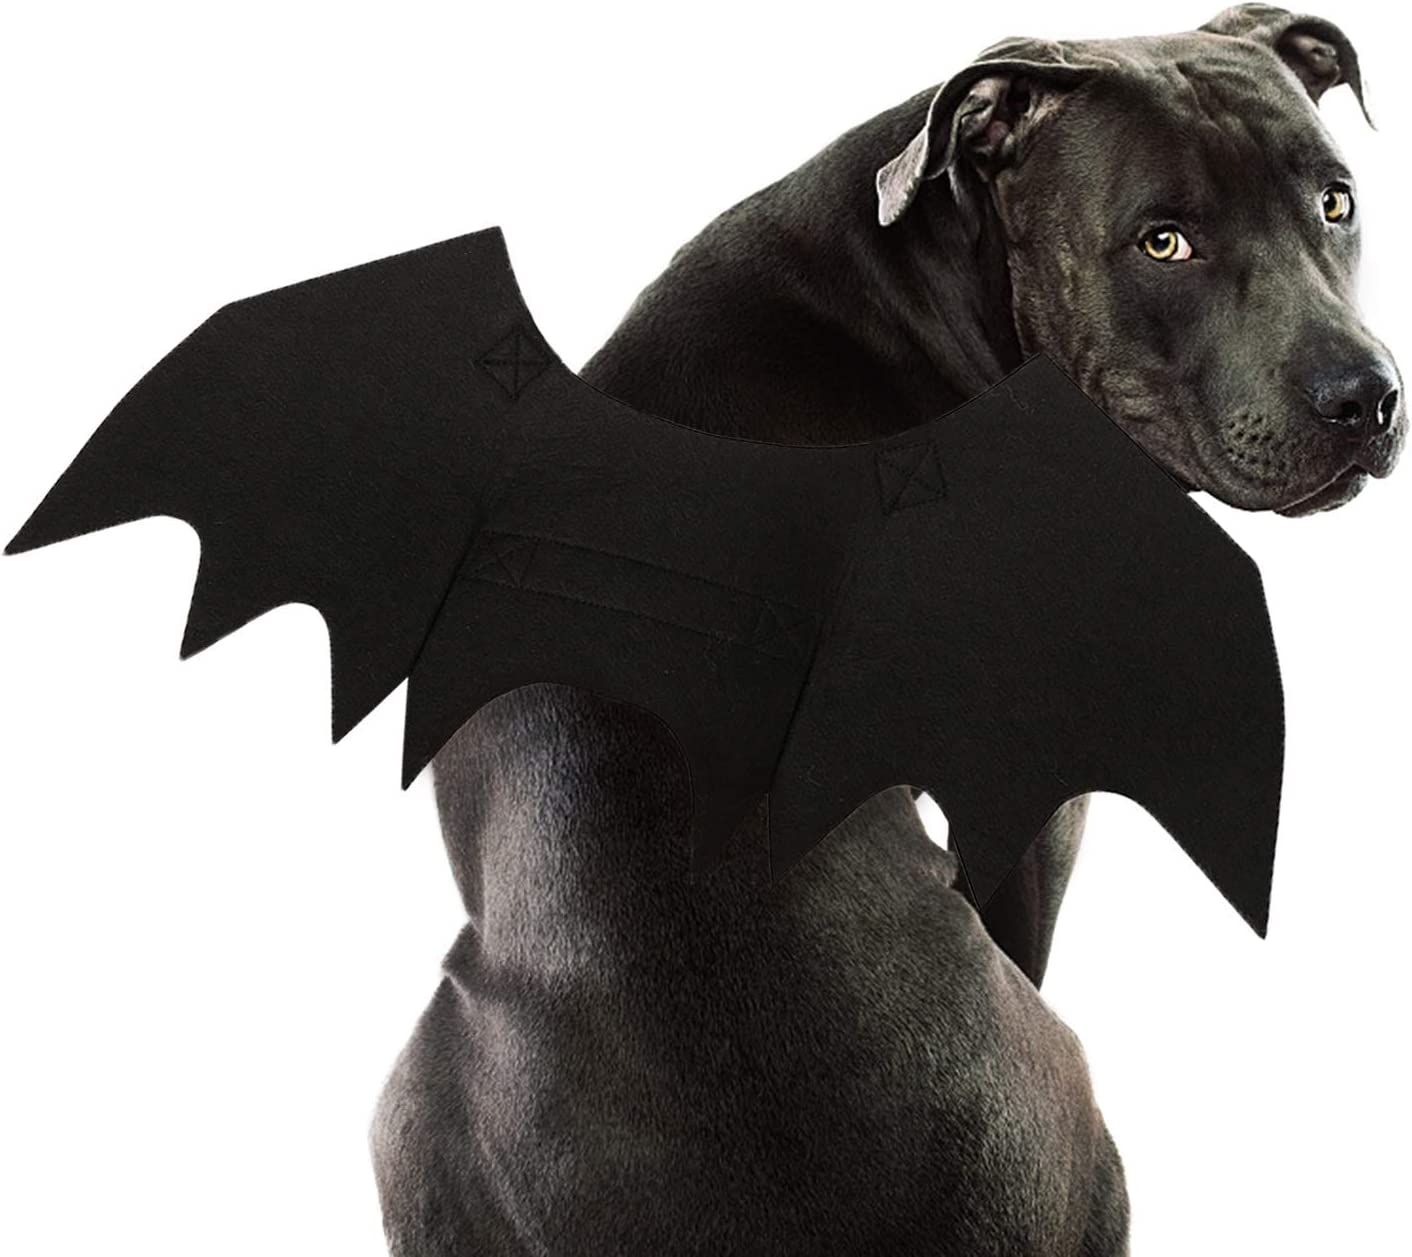 Find Boxer Halloween Costumes for your Big Dog - ItsaBoxerDogsLife